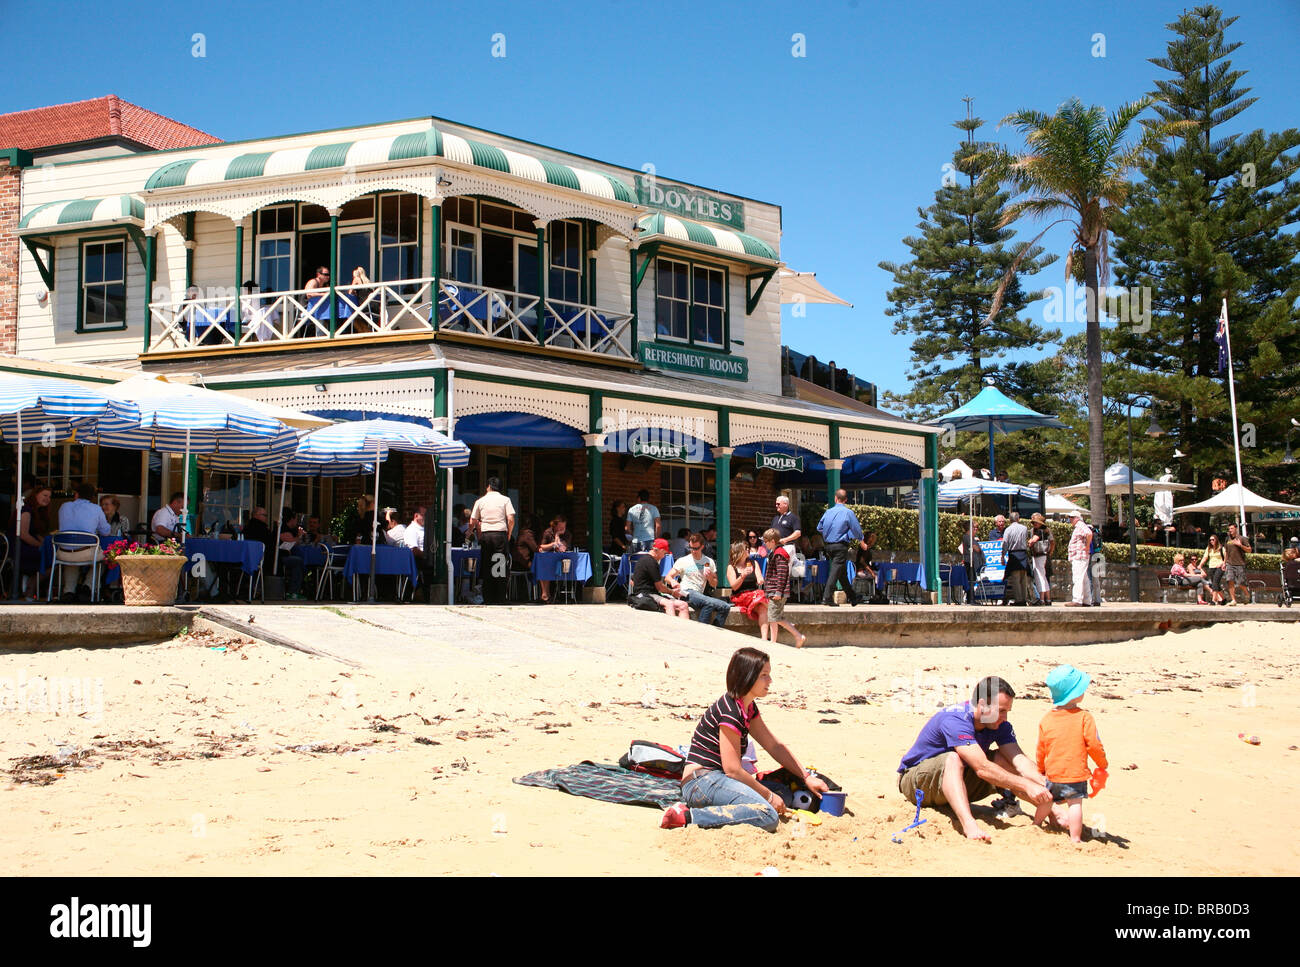 Doyles seafood restaurant in Watsons Bay, Sydney, NSW, Australia Stock Photo